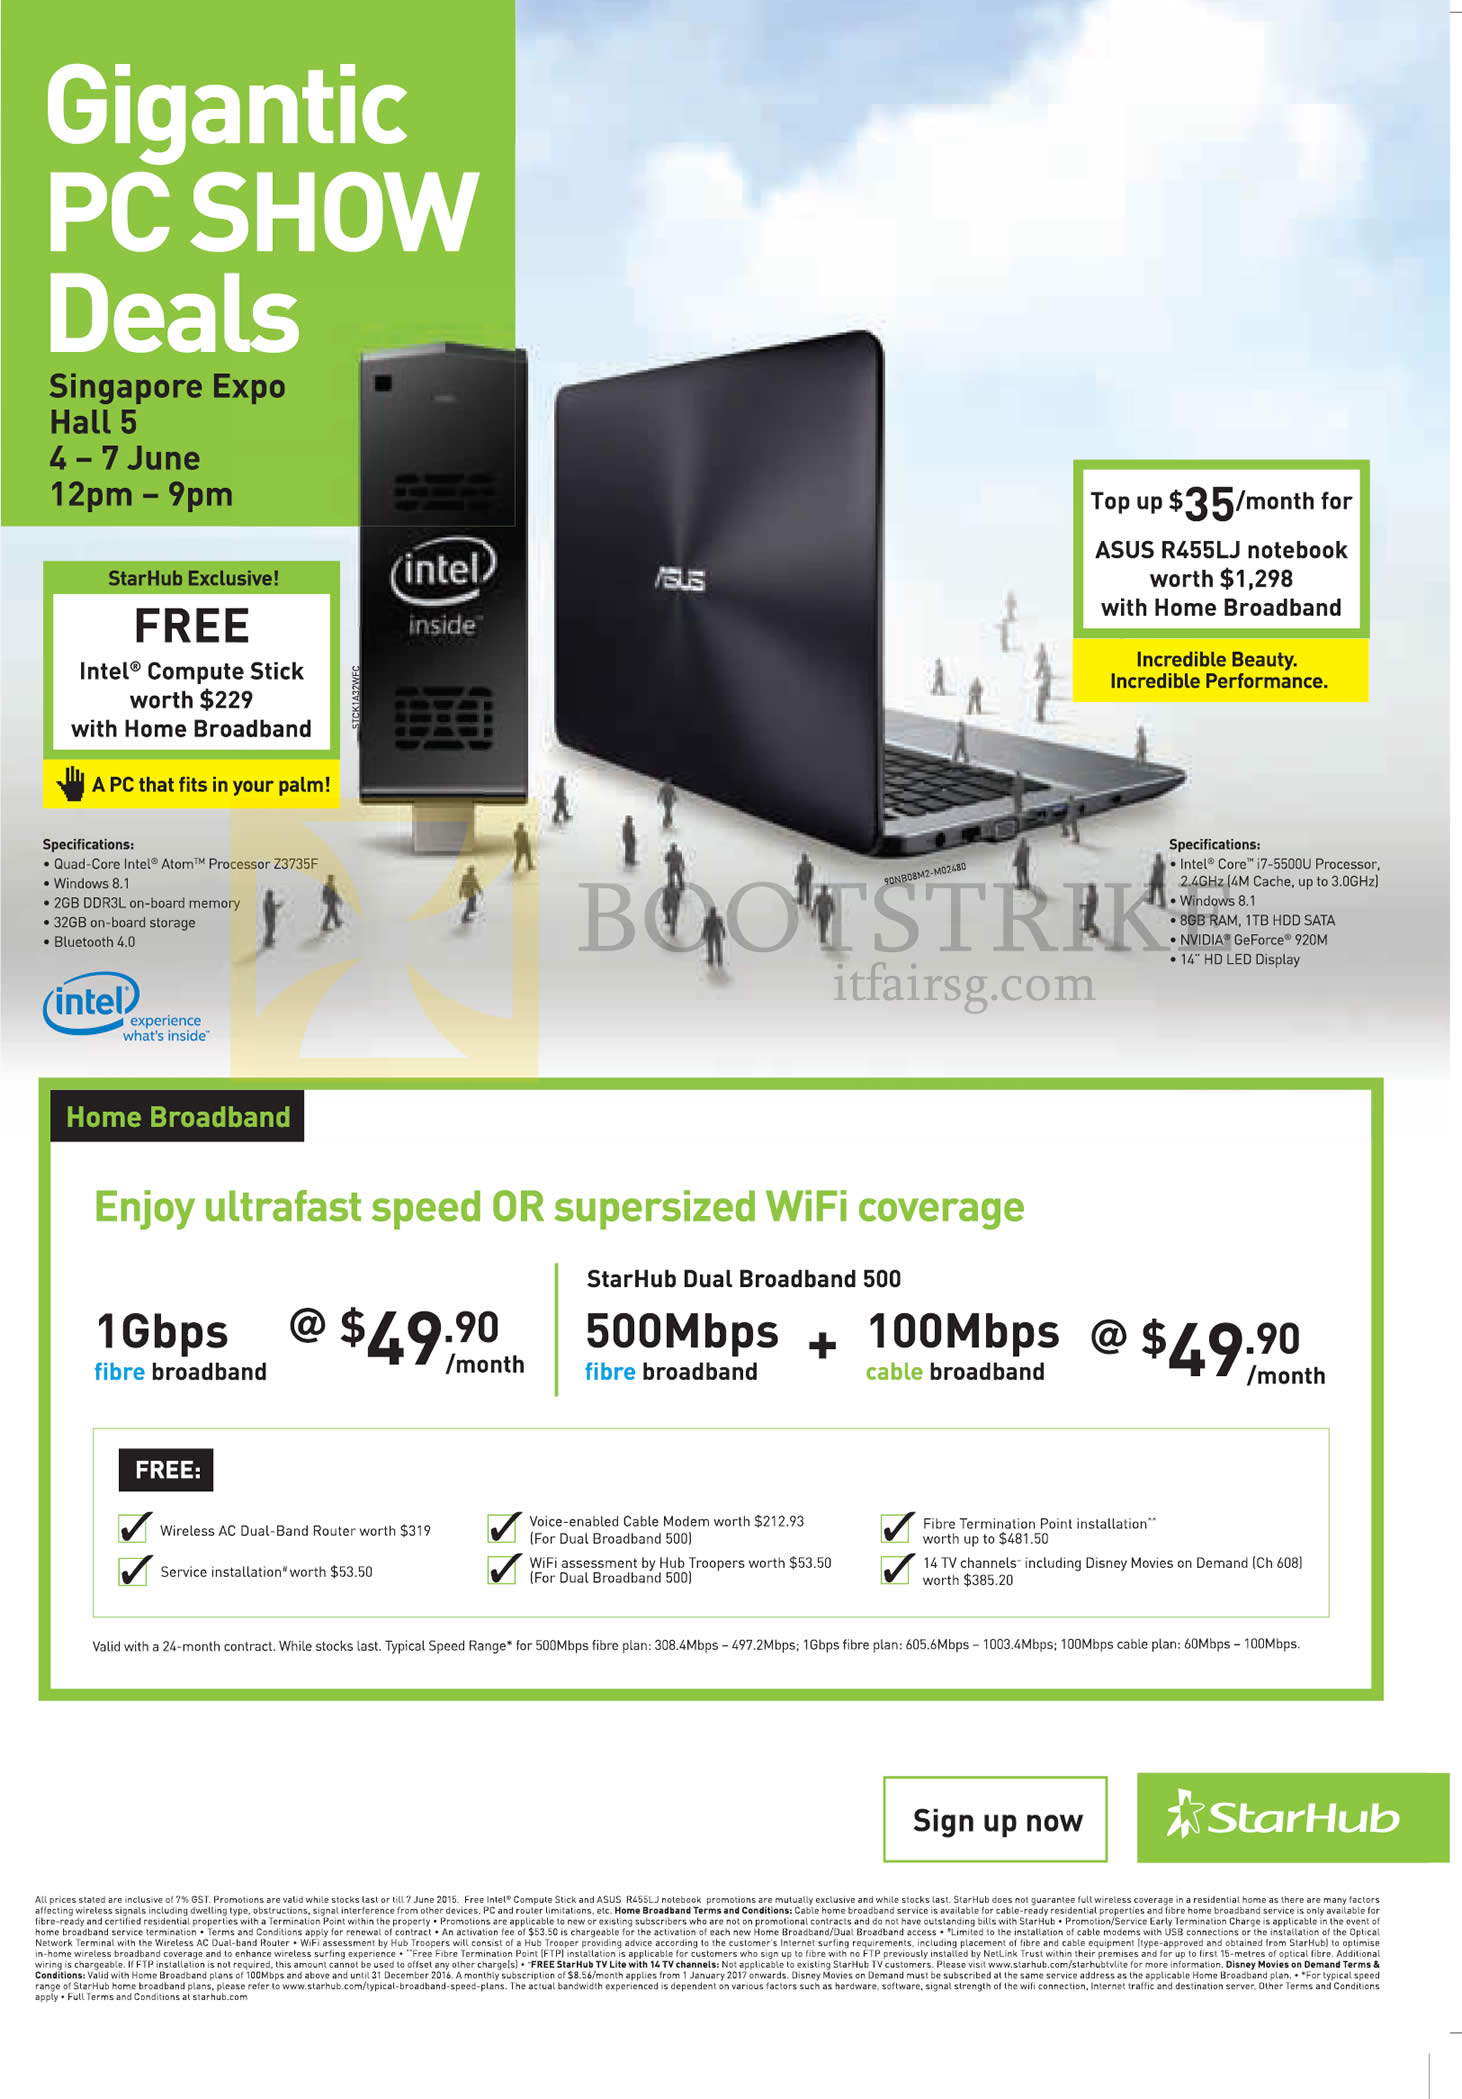 PC SHOW 2015 price list image brochure of Starhub Highlights 1Gbps Fibre 49.90, Free Intel Compute Stick, ASUS R455LJ Notebook, Dual Broadband 500